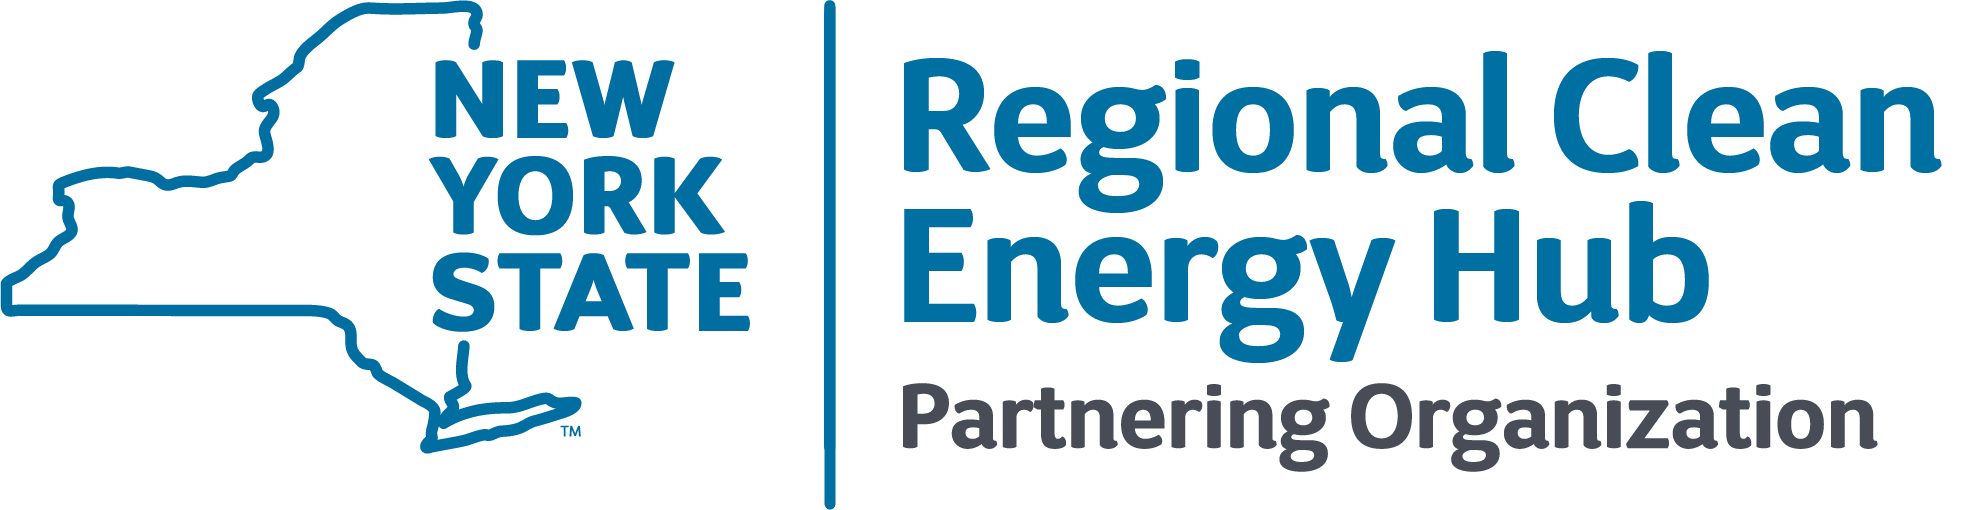 11NY Regional Clean Energy Hub Partnering Organization Logo